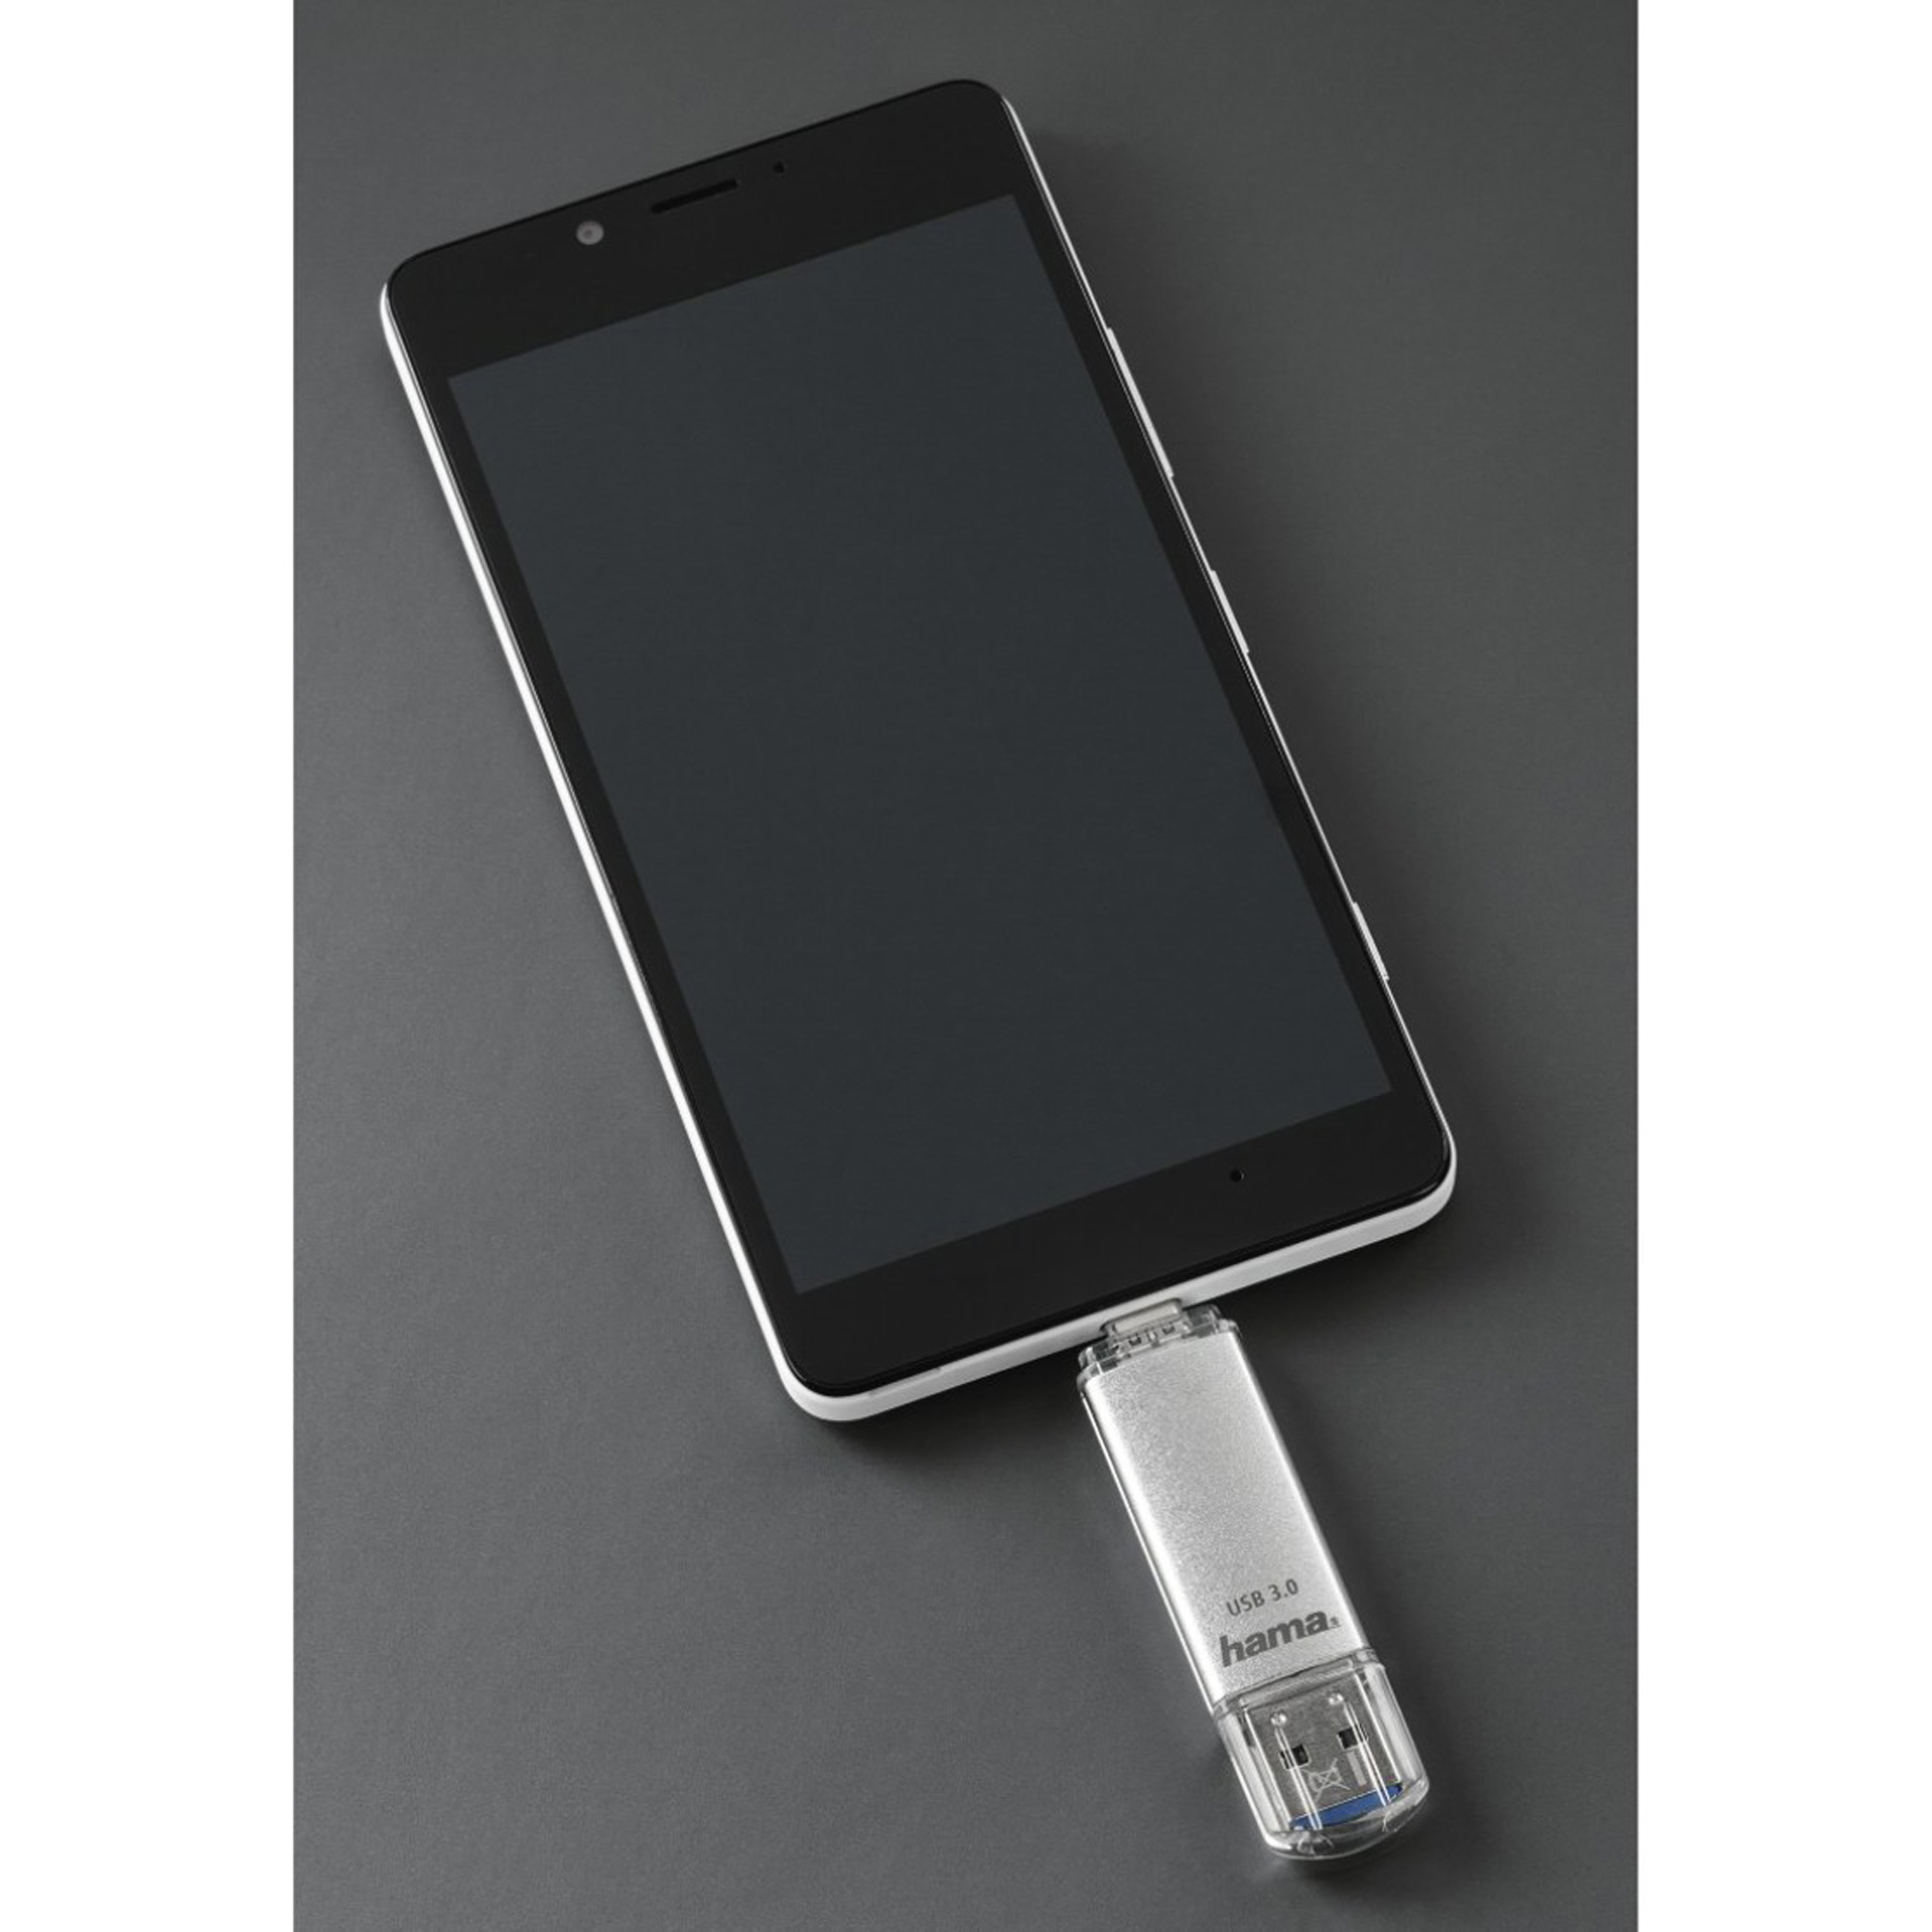 Hama USB Stick C-Laeta USB 3.1, USB 3.0 64 Gbyte